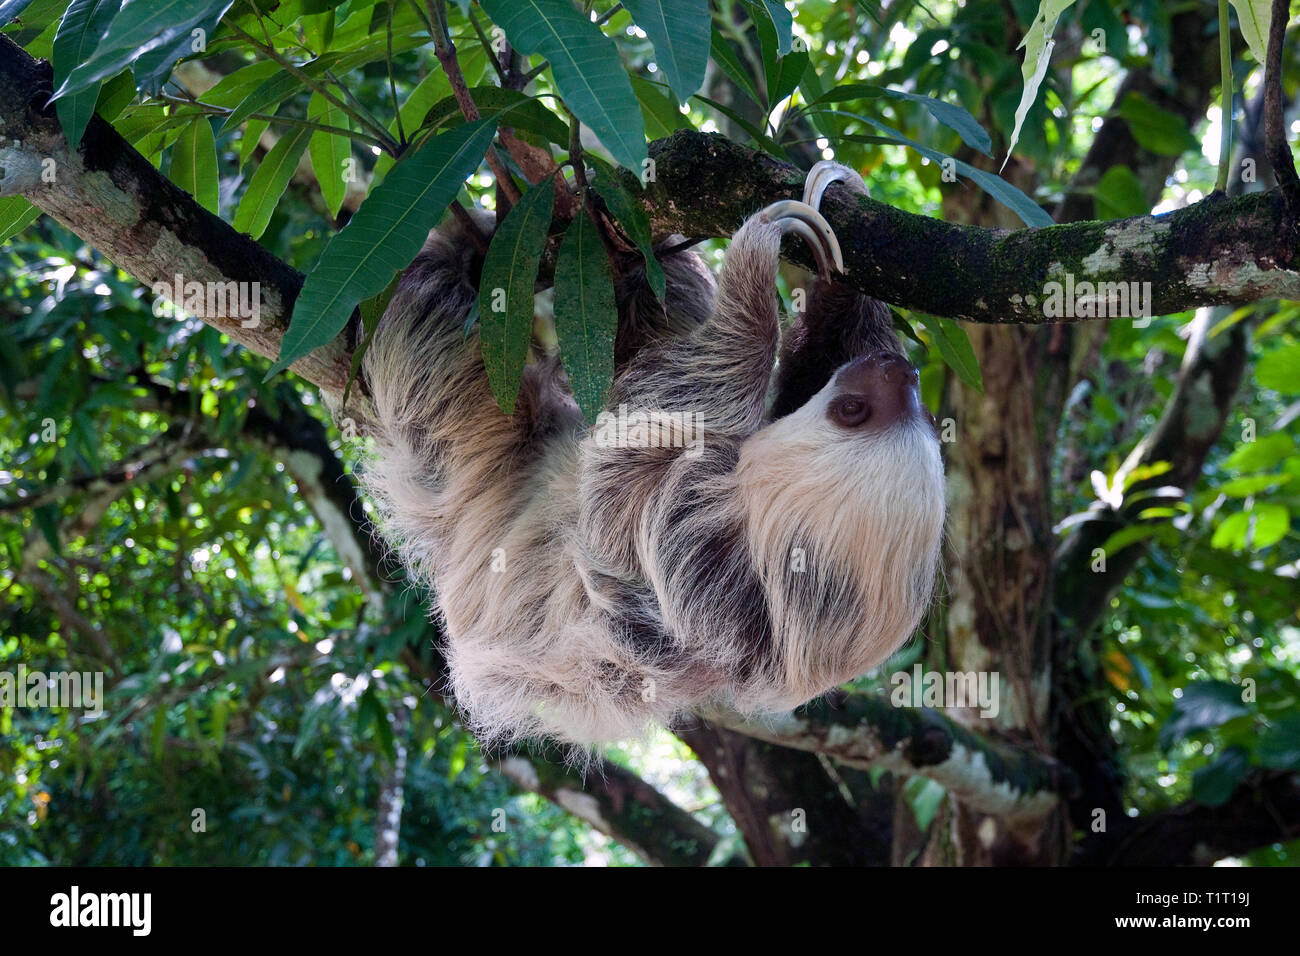 Marrone-throated Sloth (Bradypus variegatus), su un albero, Siquirres, Costa Rica Foto Stock